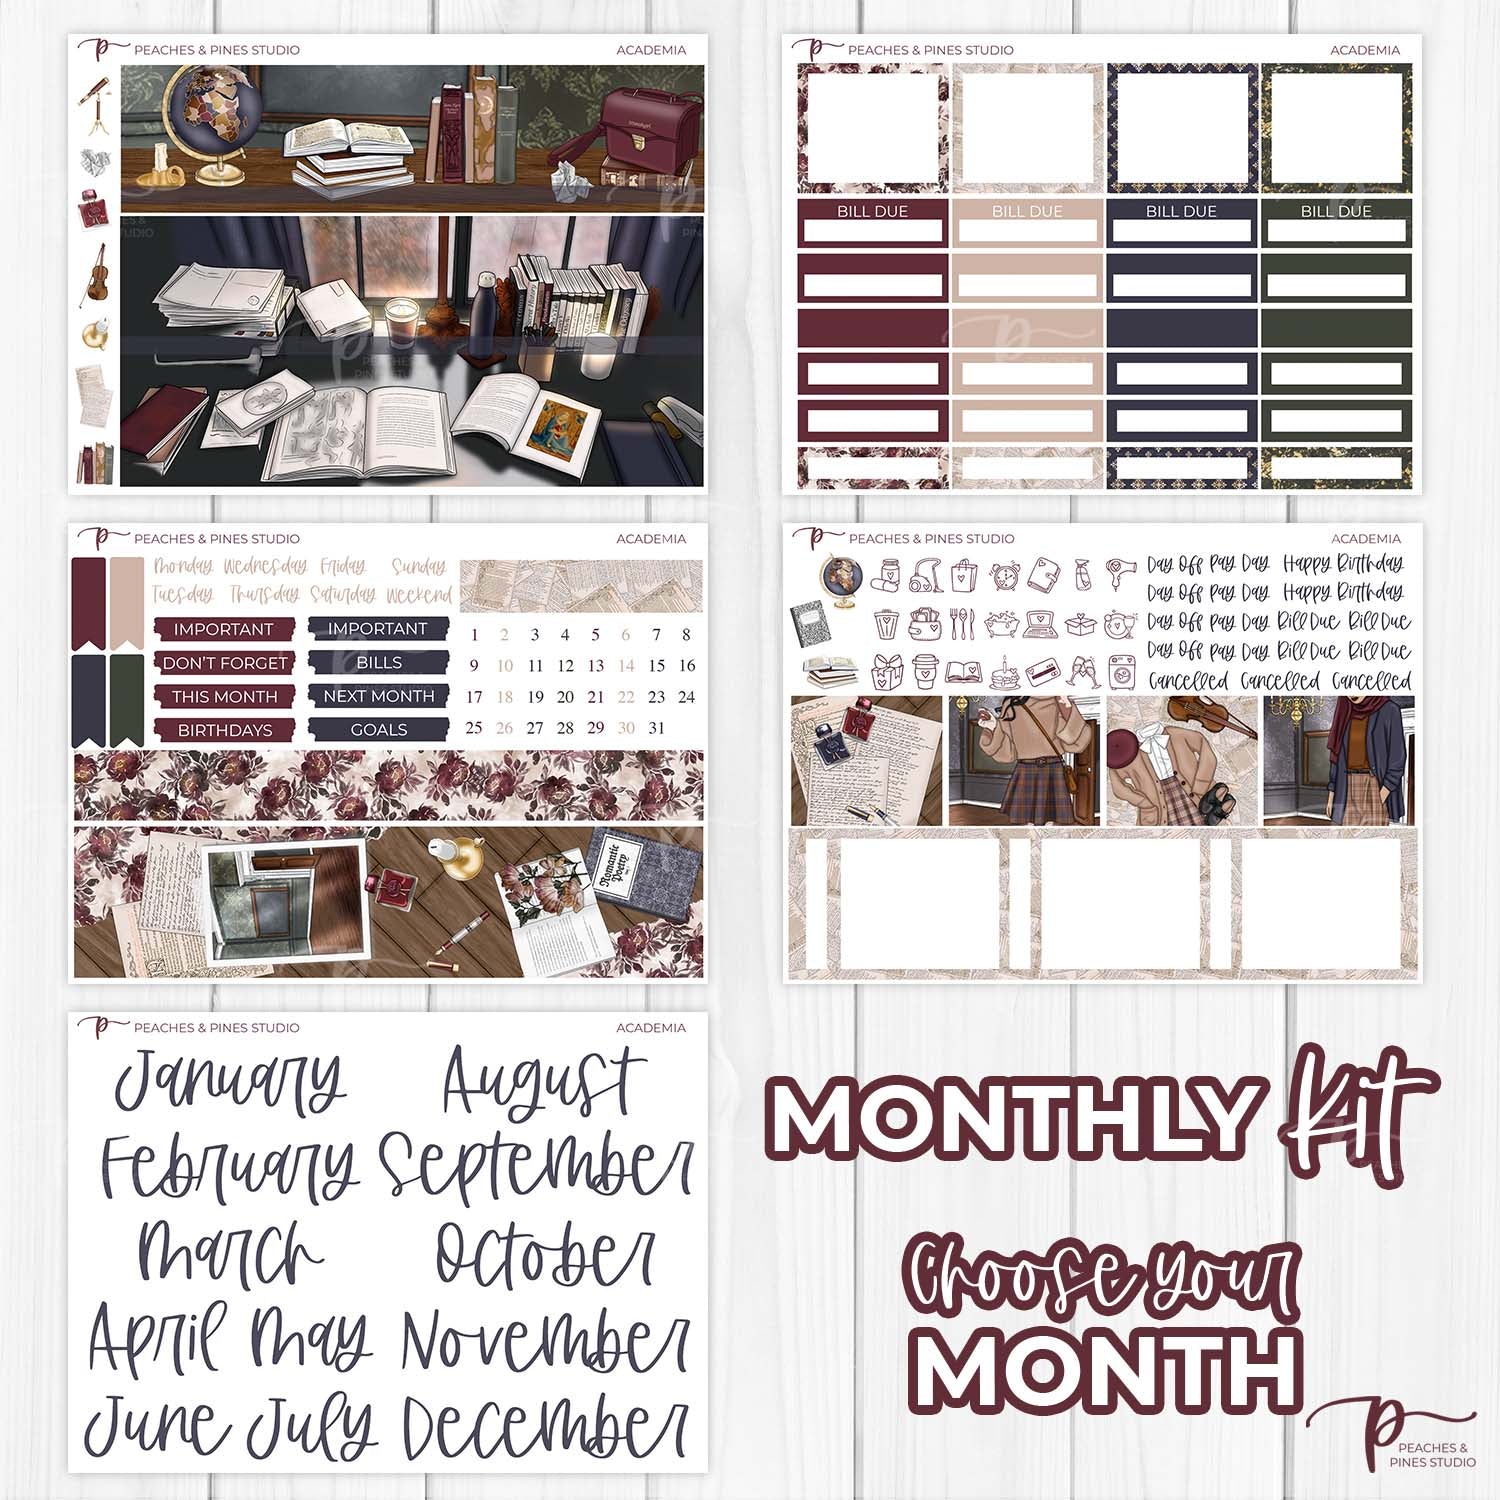 Academia  - Monthly Kit